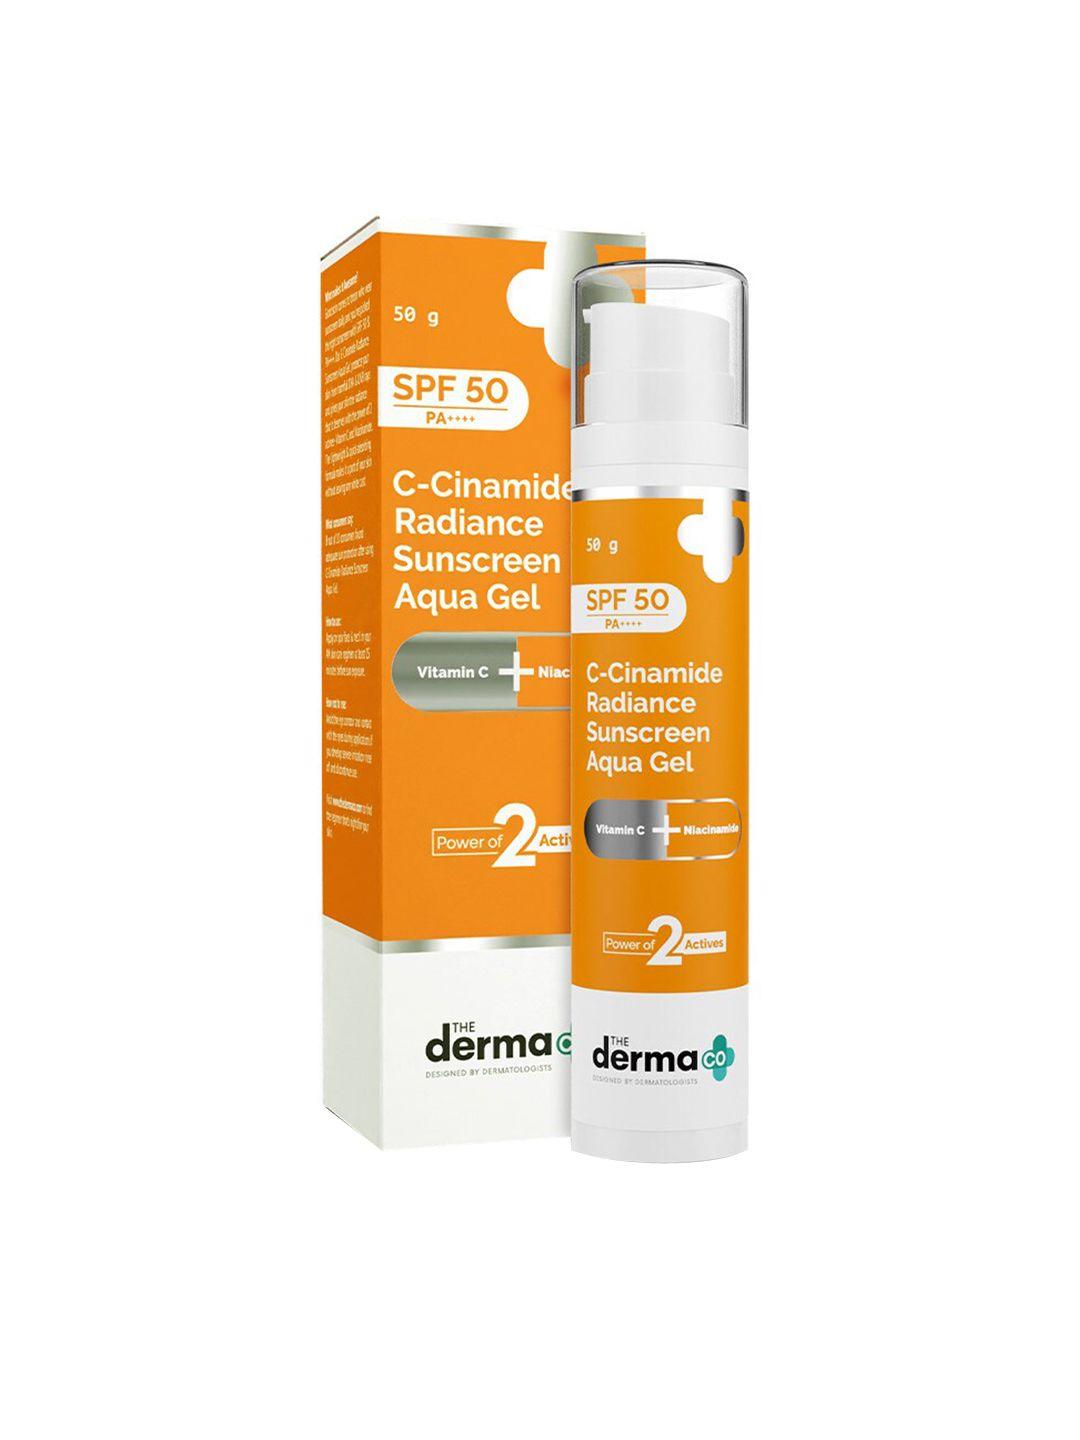 the derma co. spf50 c-cinamide radiance sunscreen aqua gel with vit c & niacinamide - 50g